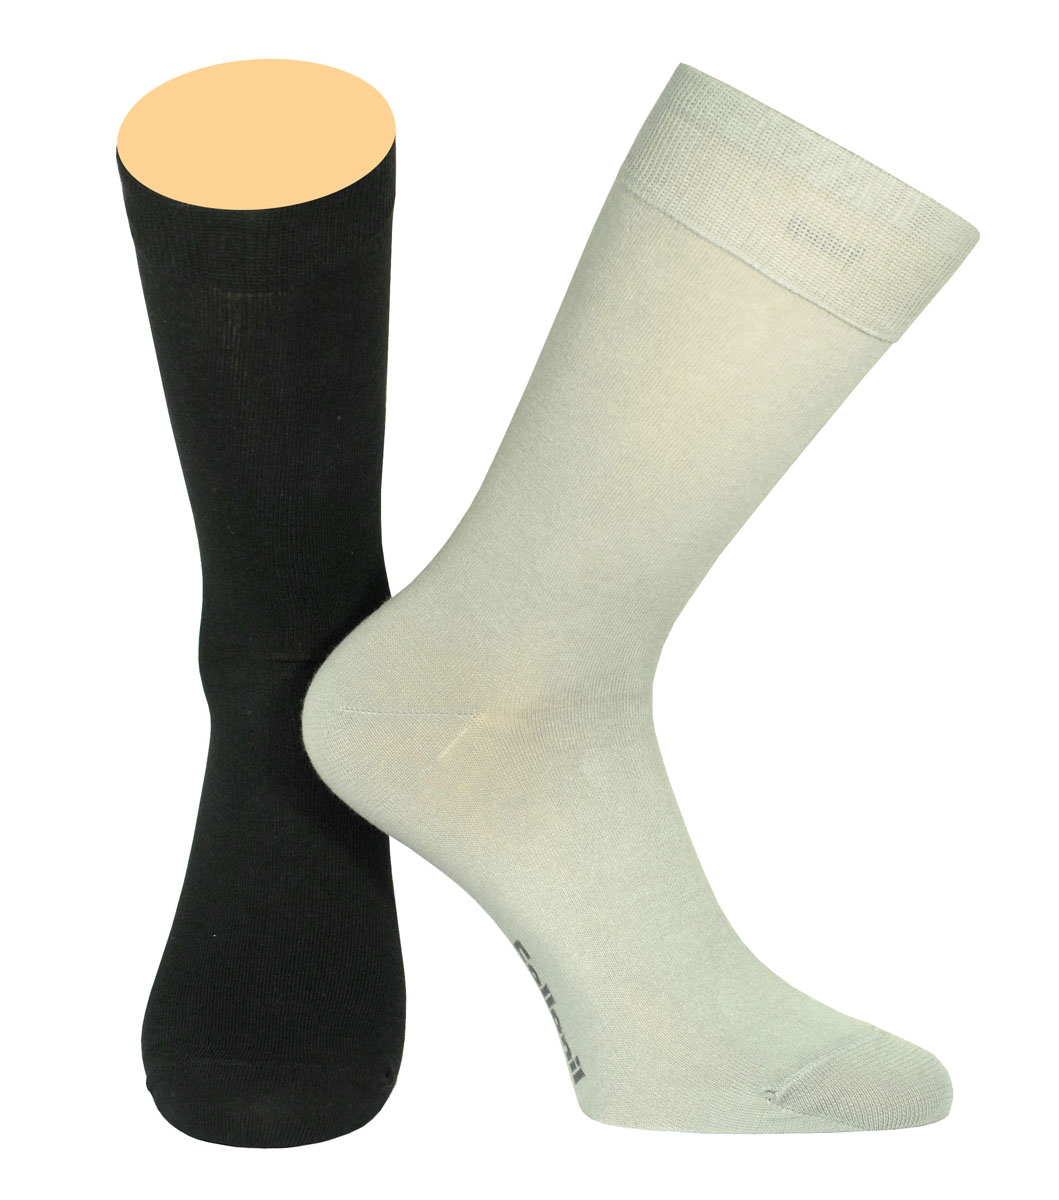 Носки мужские Collonil, цвет: черный, серый, 2 пары. CE3-40/02. Размер 39-42